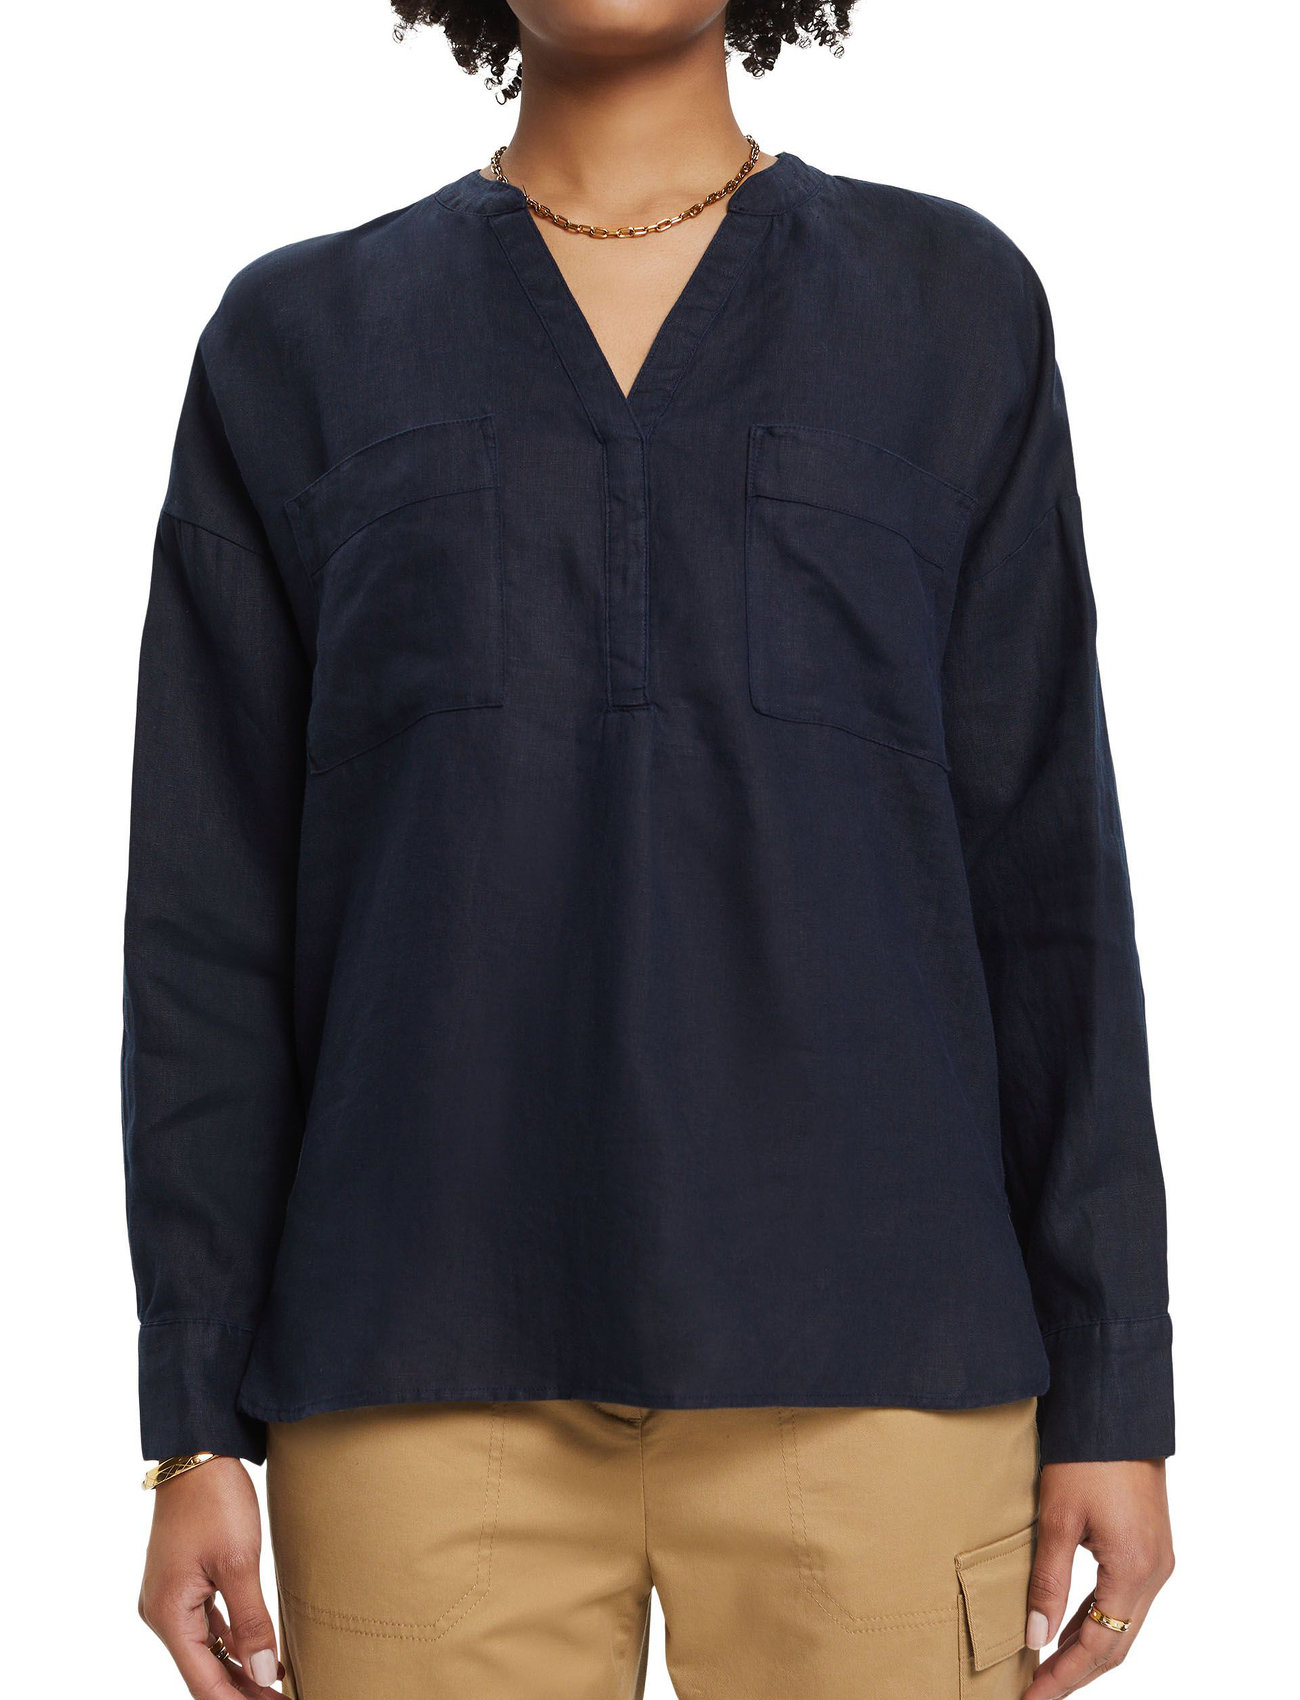 Esprit Collection - Linen blouse - palaidinės ilgomis rankovėmis - navy - 1